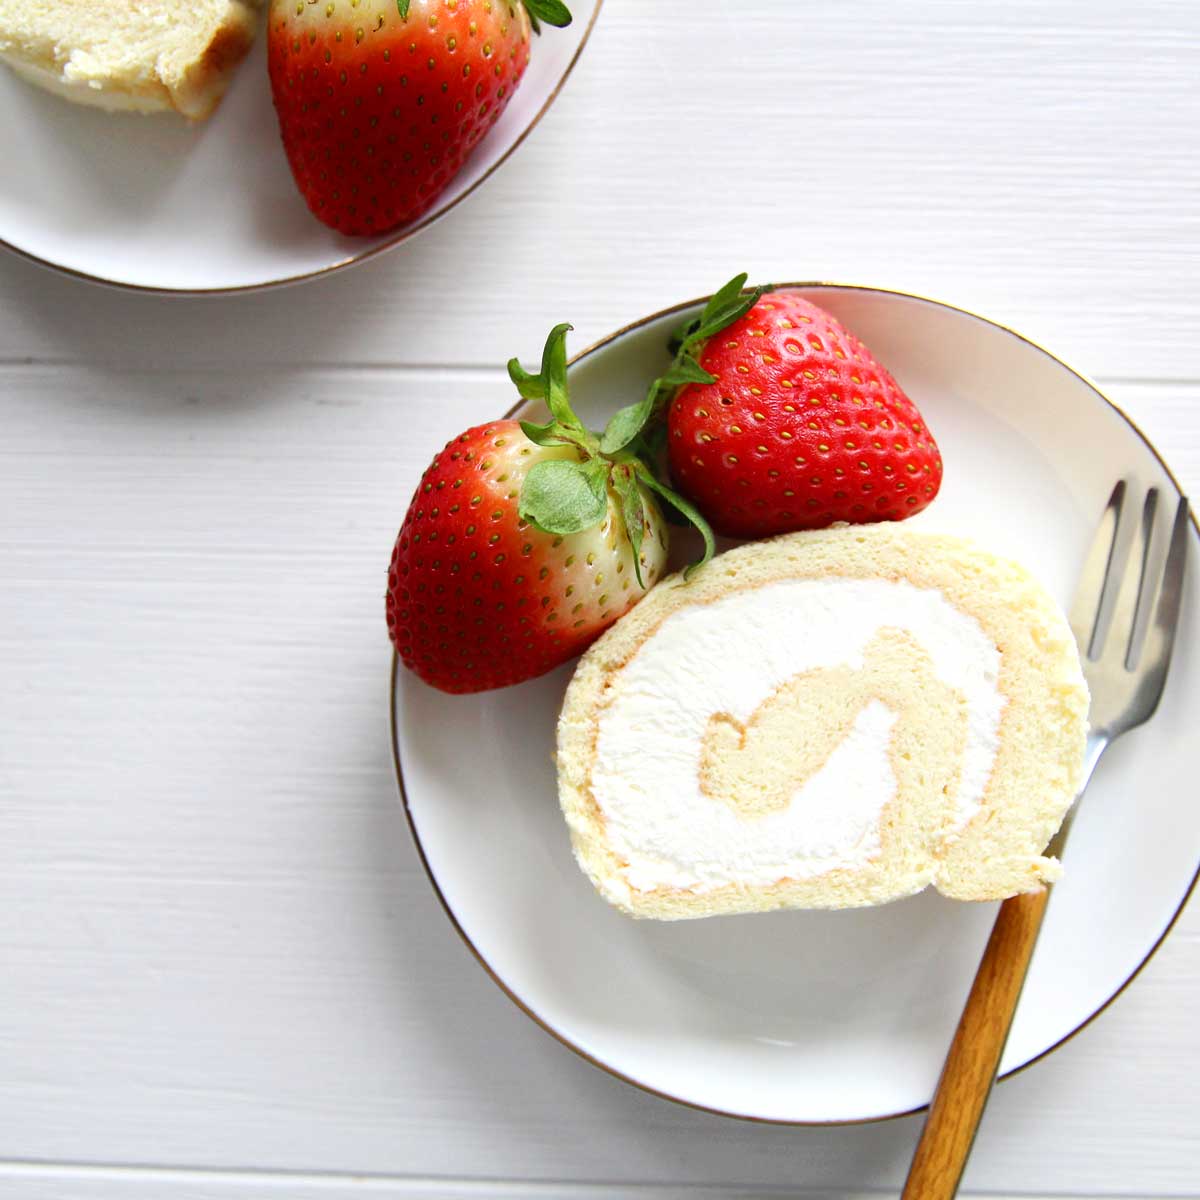 Flourless Vanilla Swiss Roll Cake made with Applesauce (Gluten-Free)